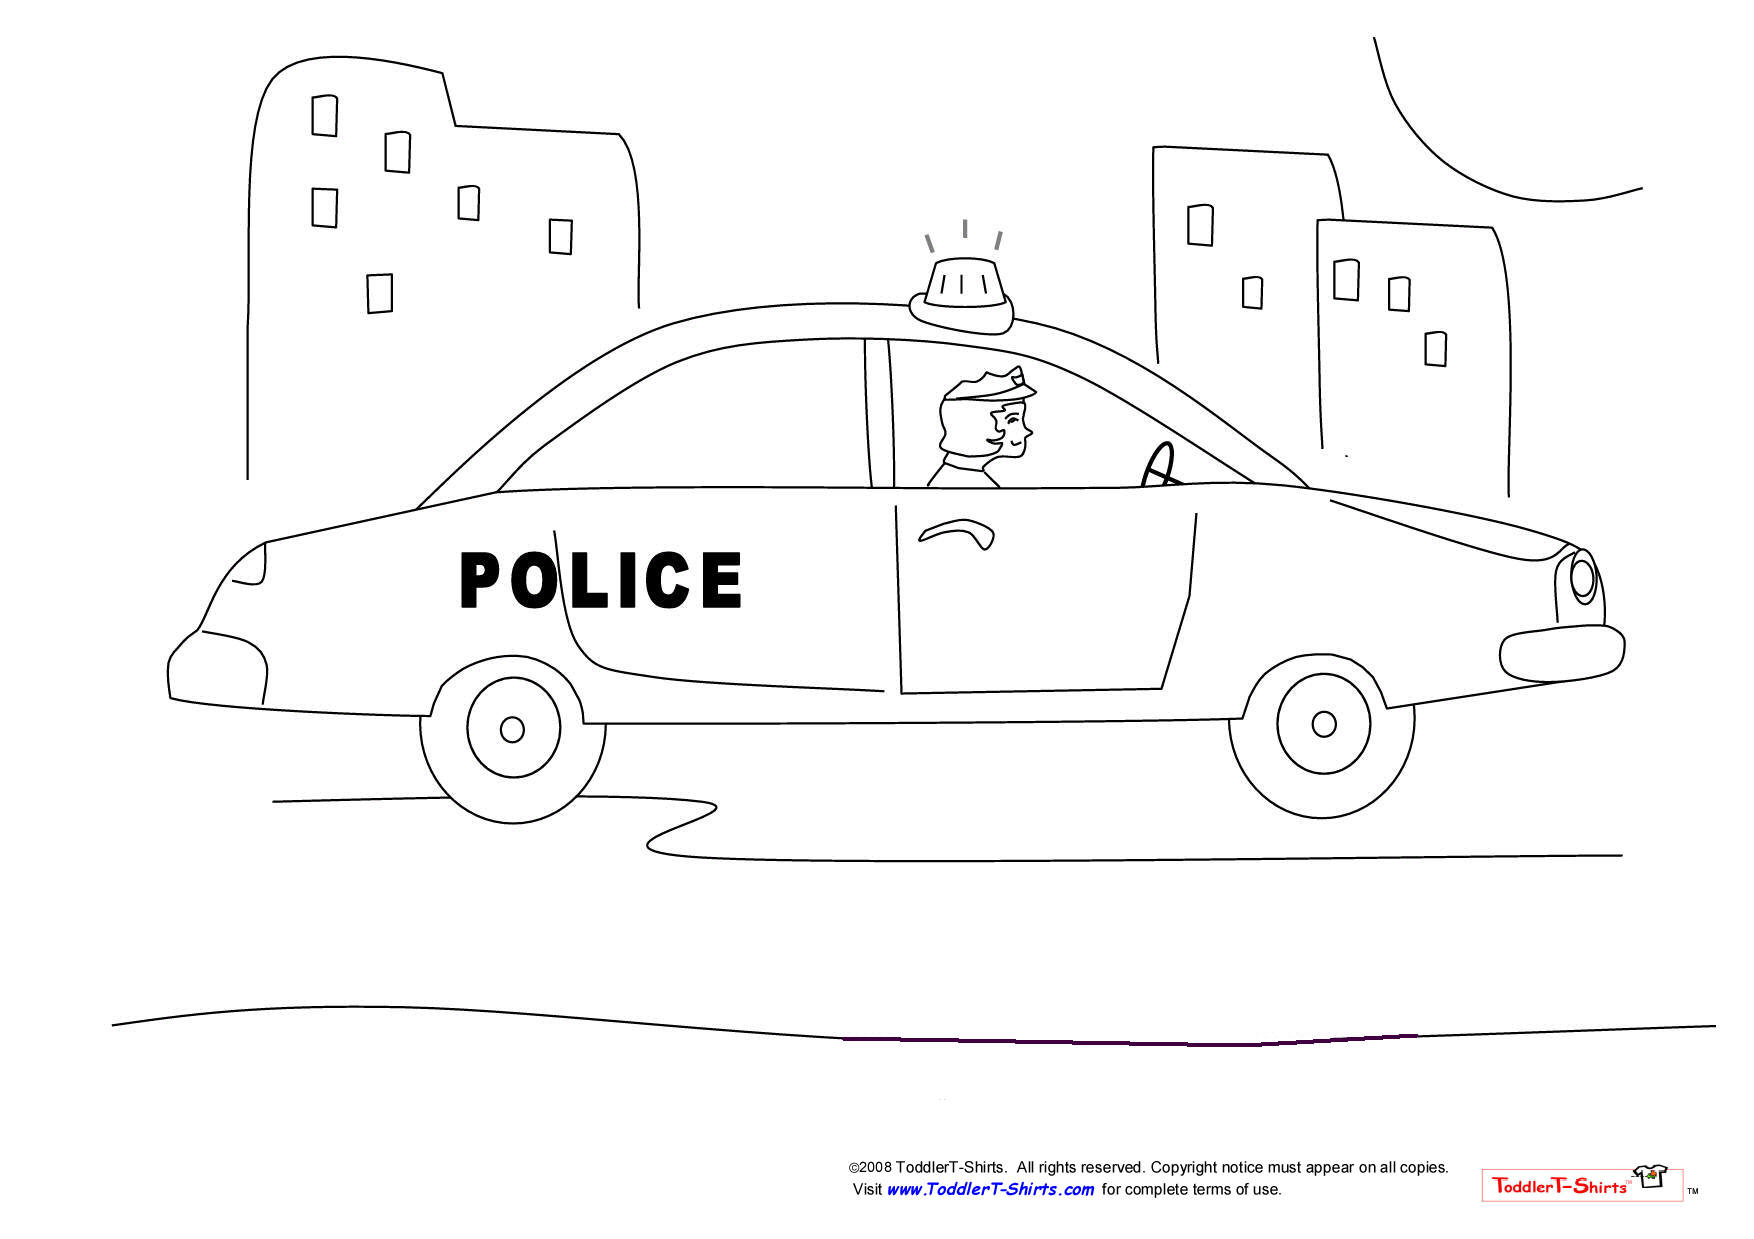 Police car 5